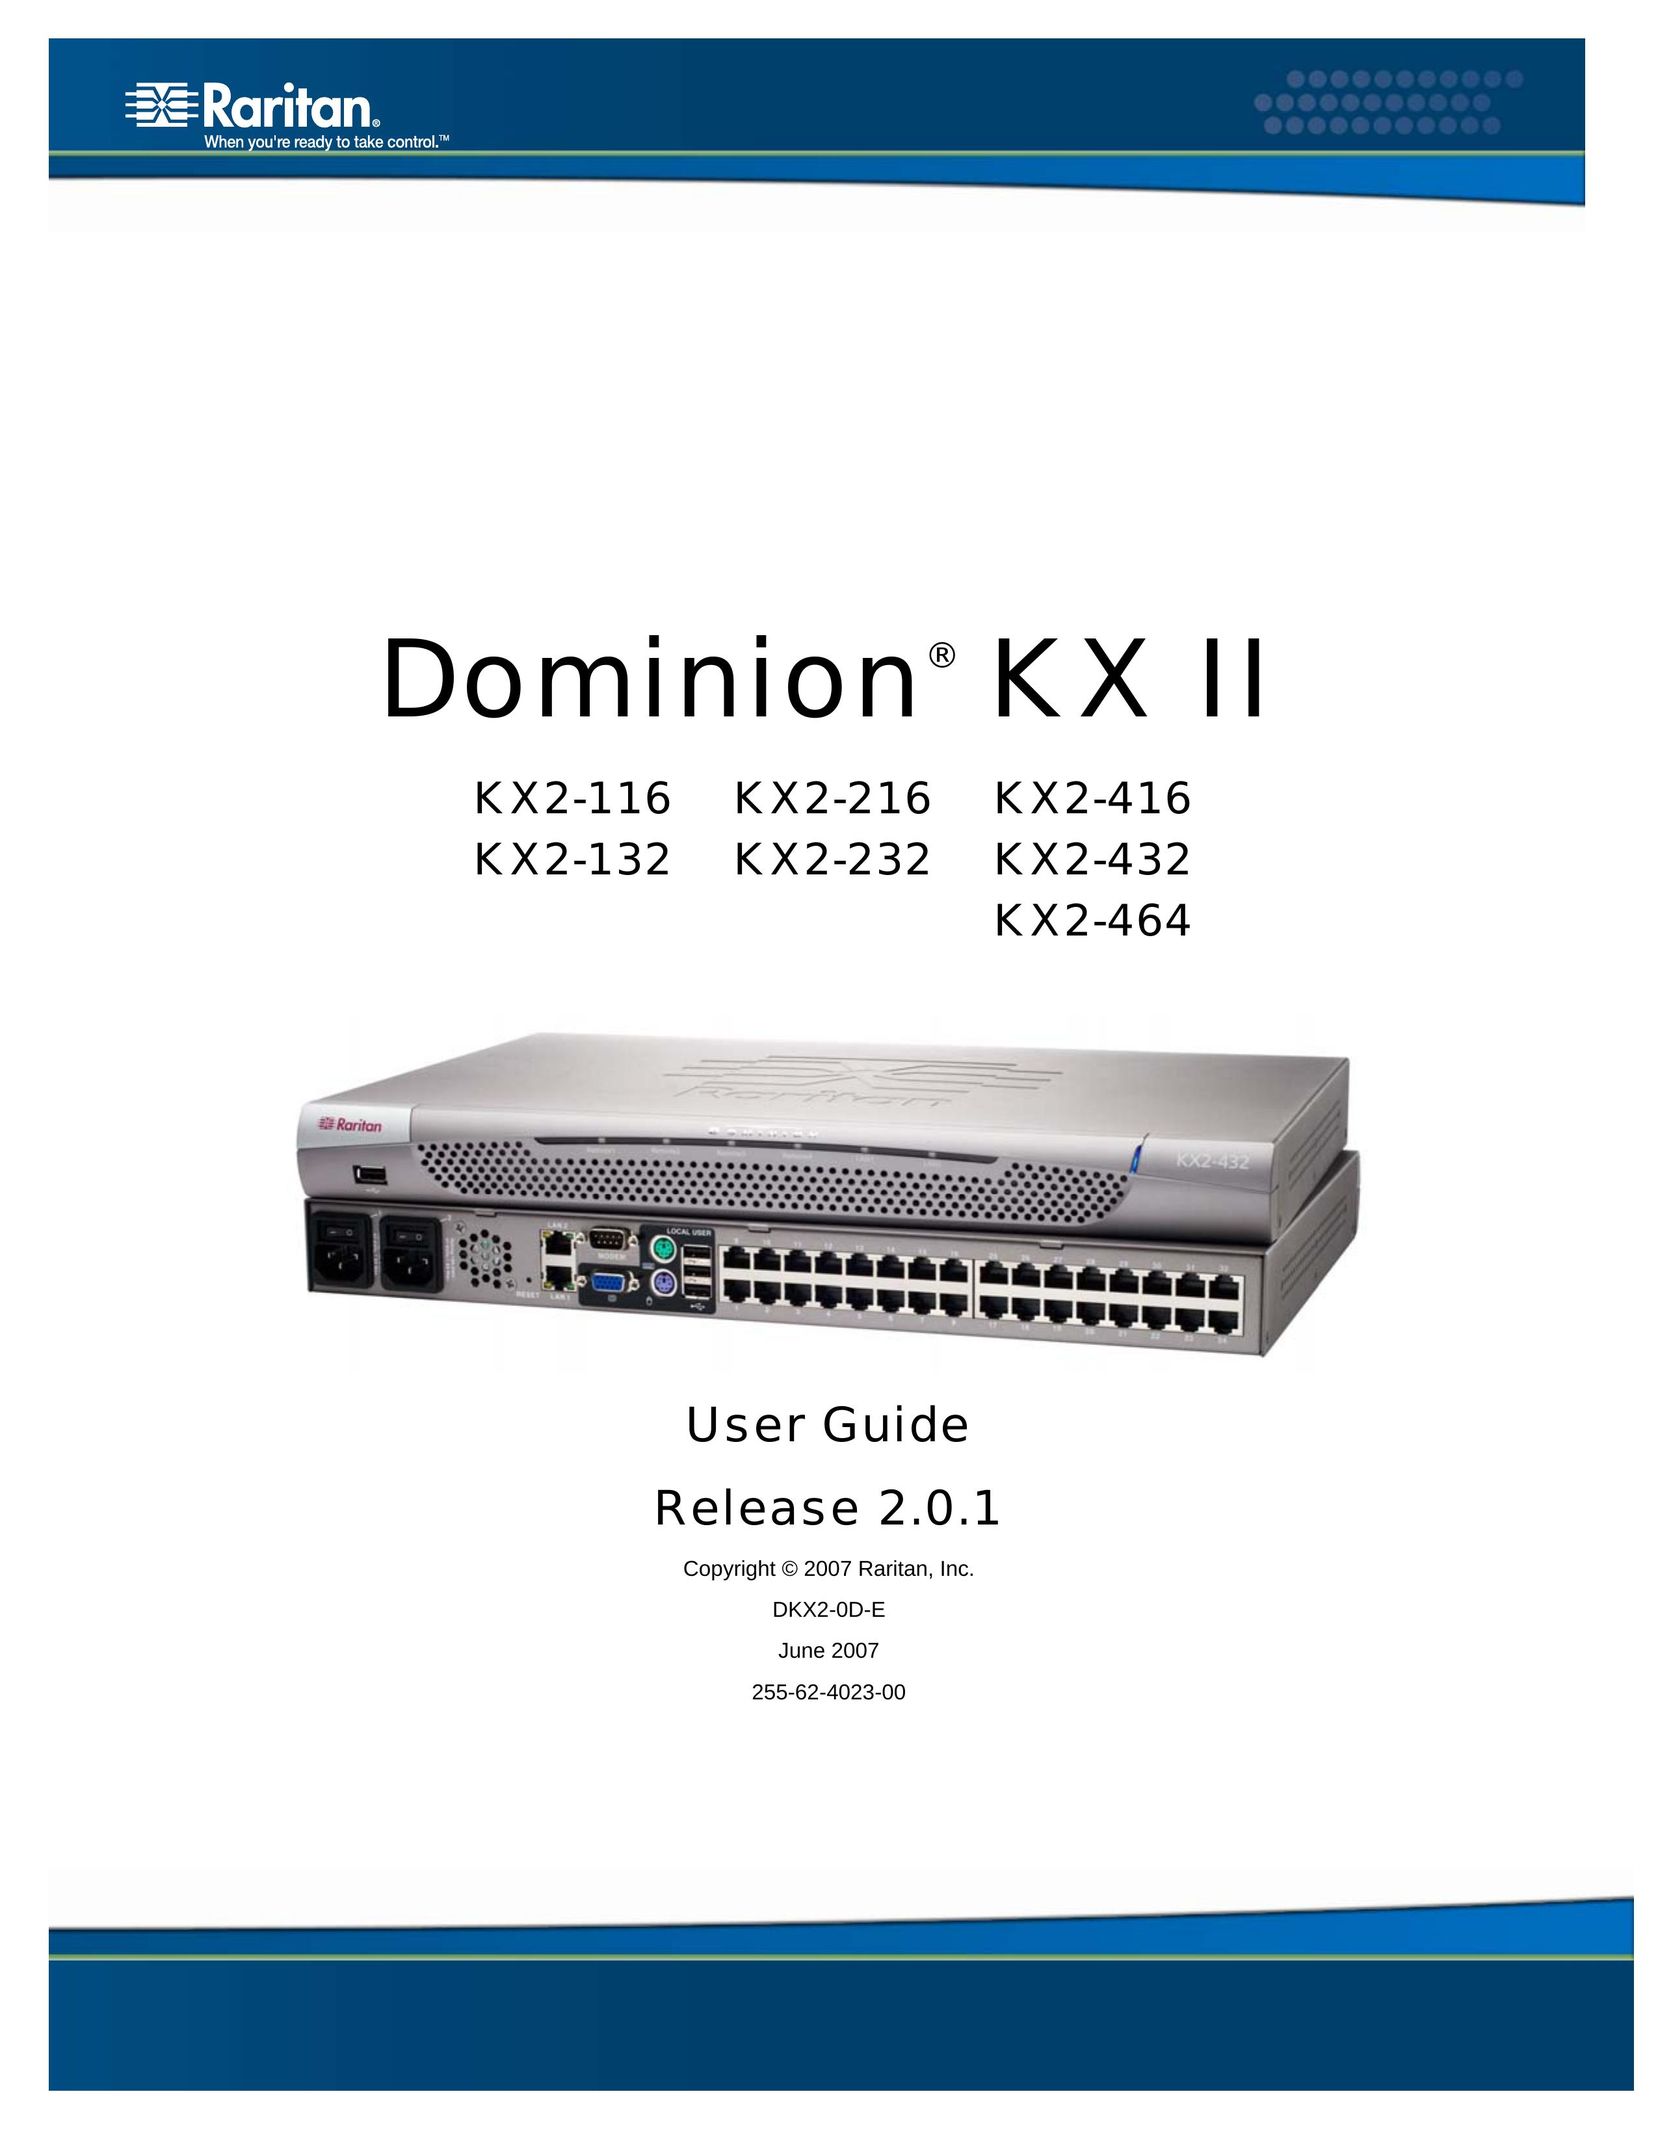 Raritan Computer KX2-116 Network Router User Manual